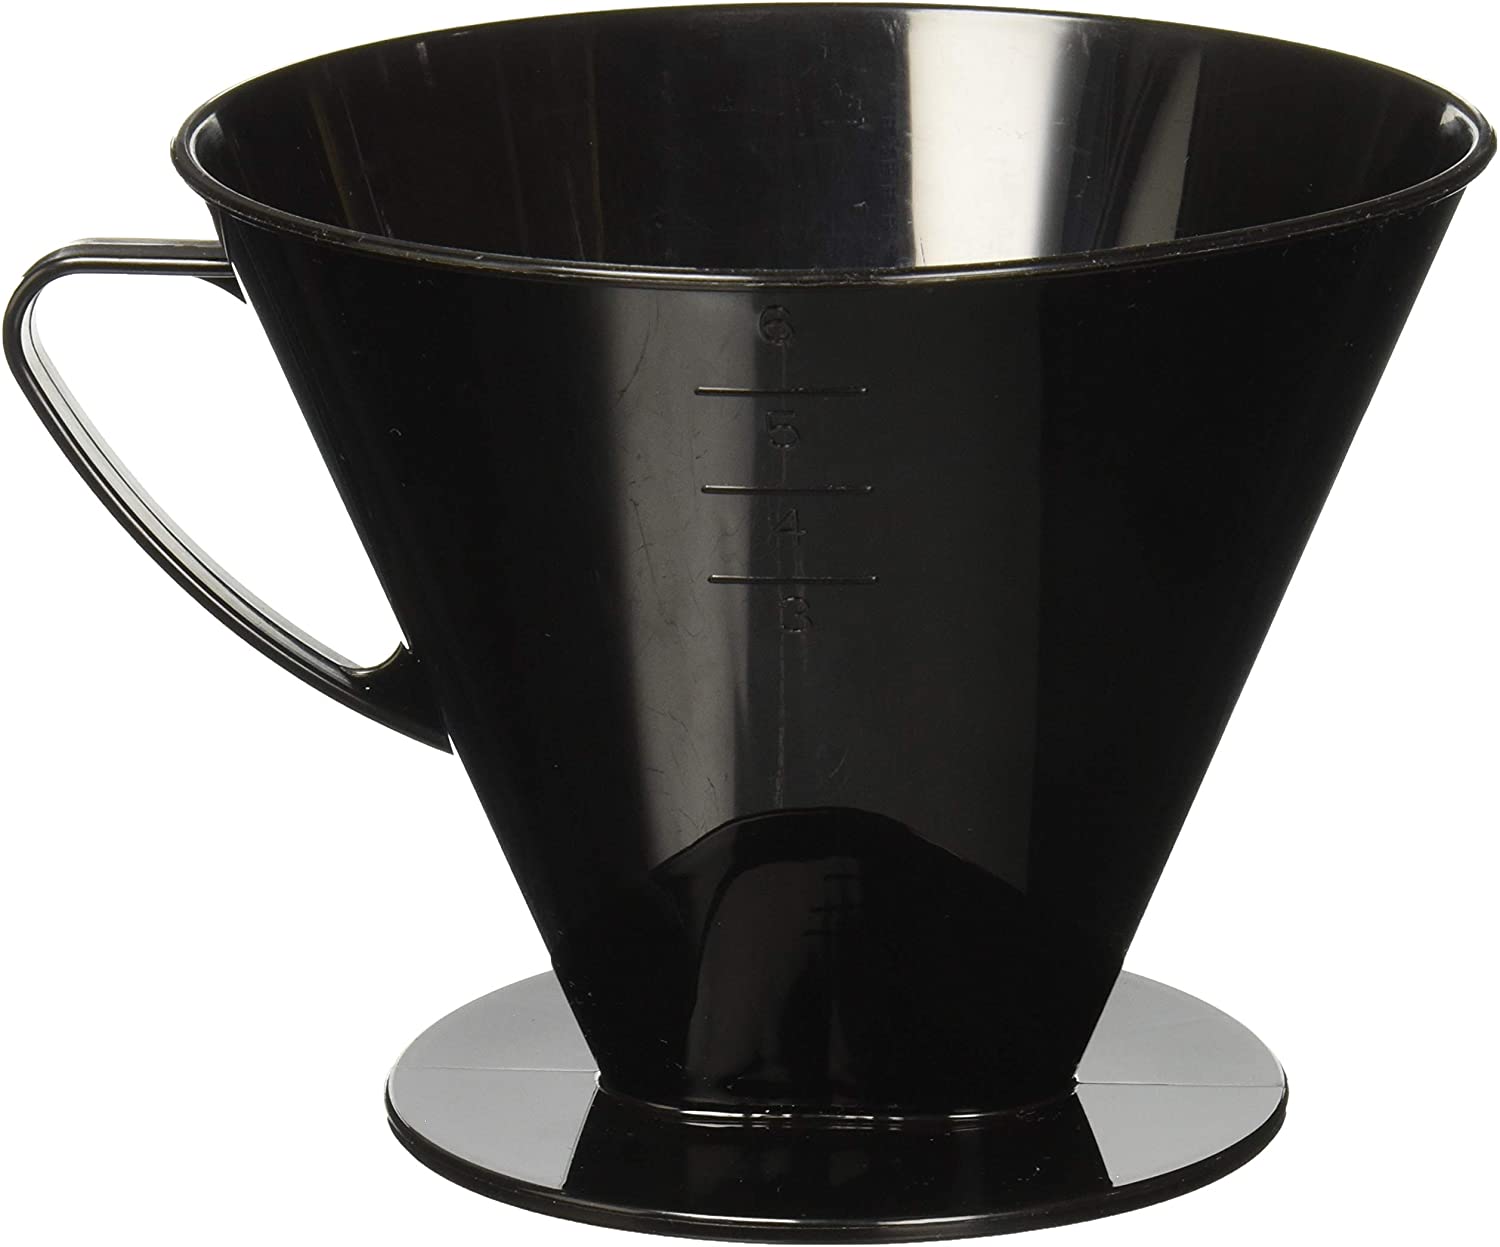 Westmark: Six Cup Coffee Filter in Black